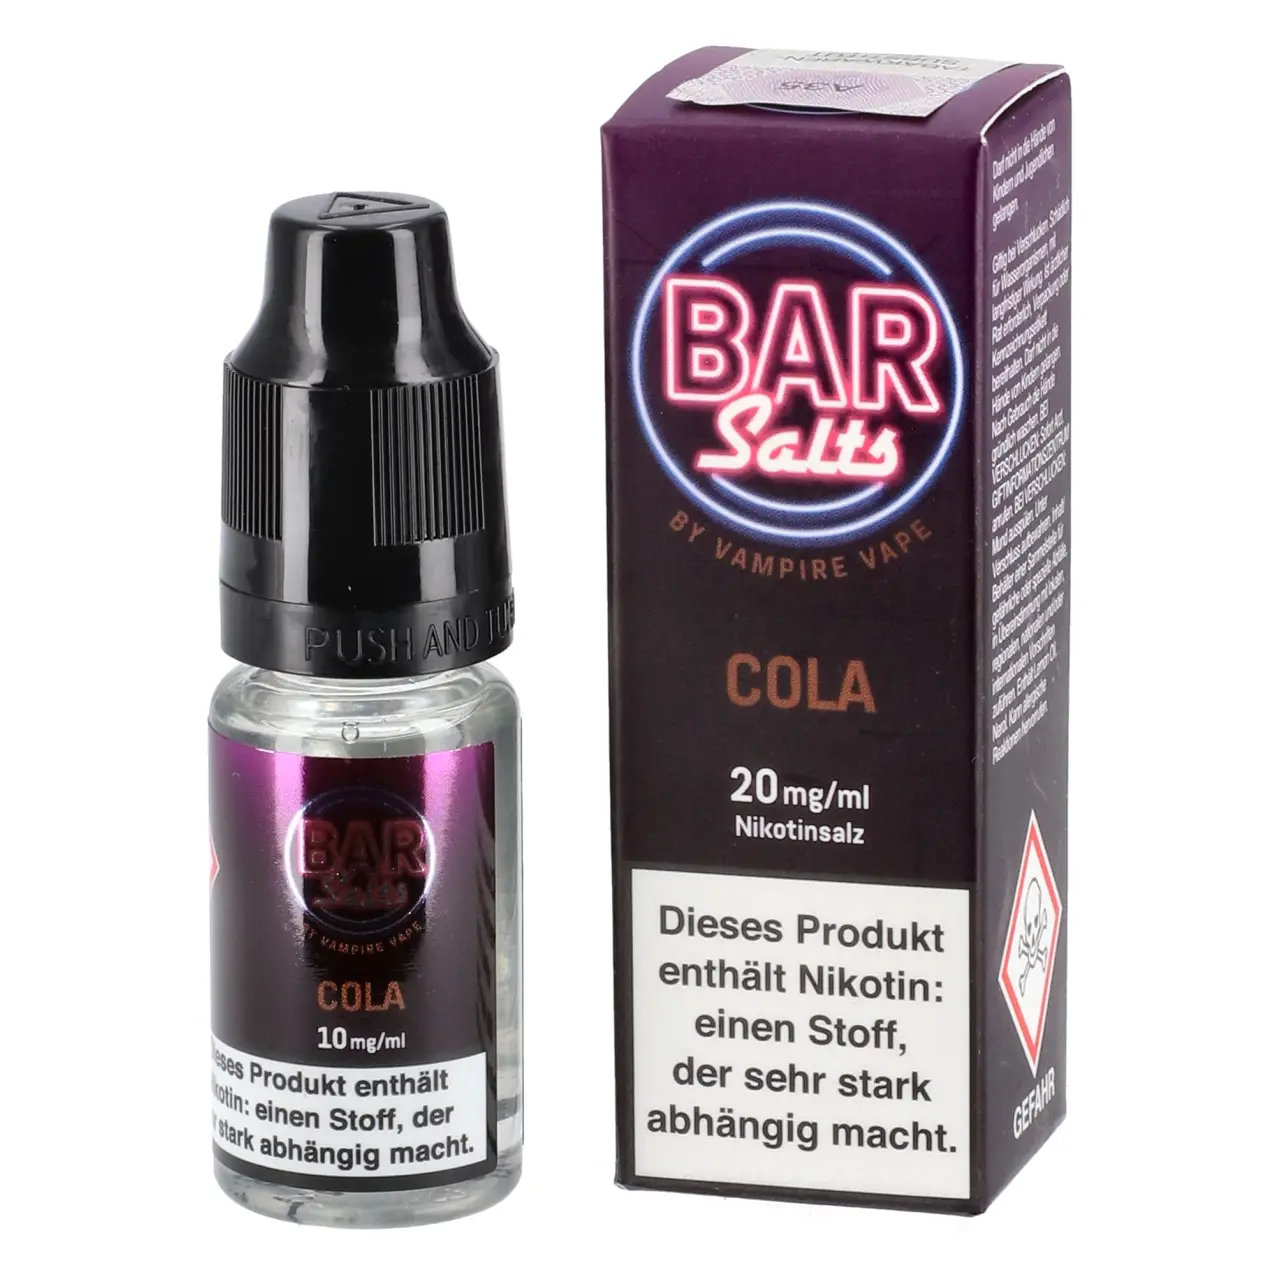 Cola - Bar Salts Nikotinsalz Liquid by Vampire Vape - 10ml